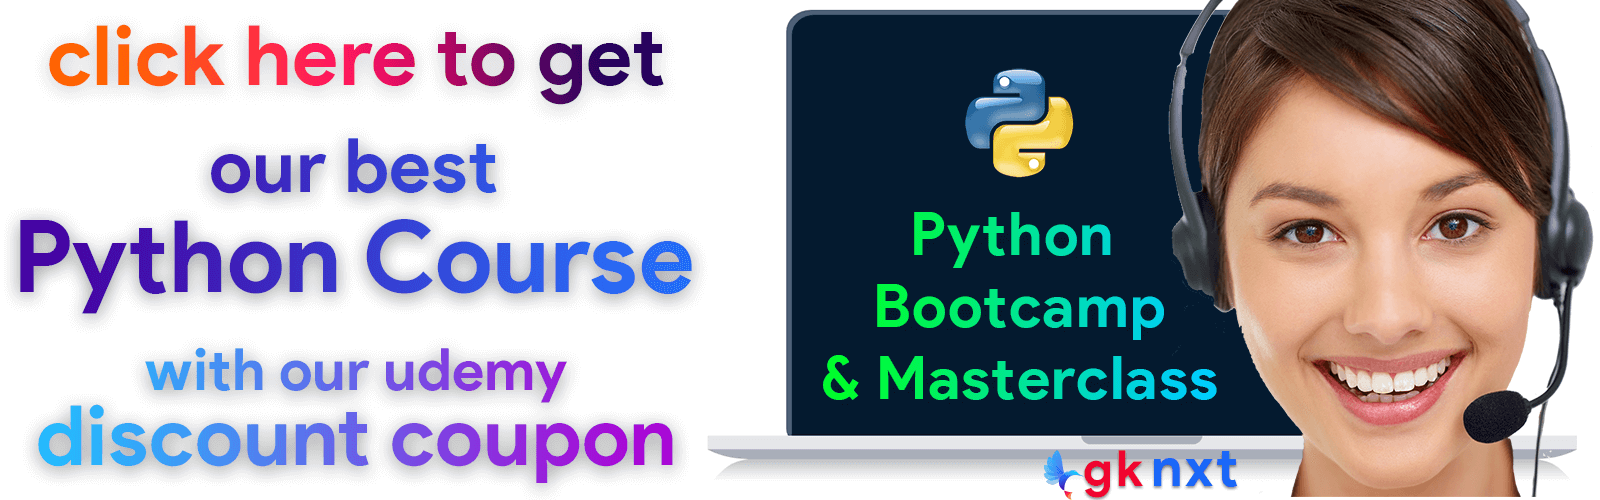 python bootcamp masterclass 2021